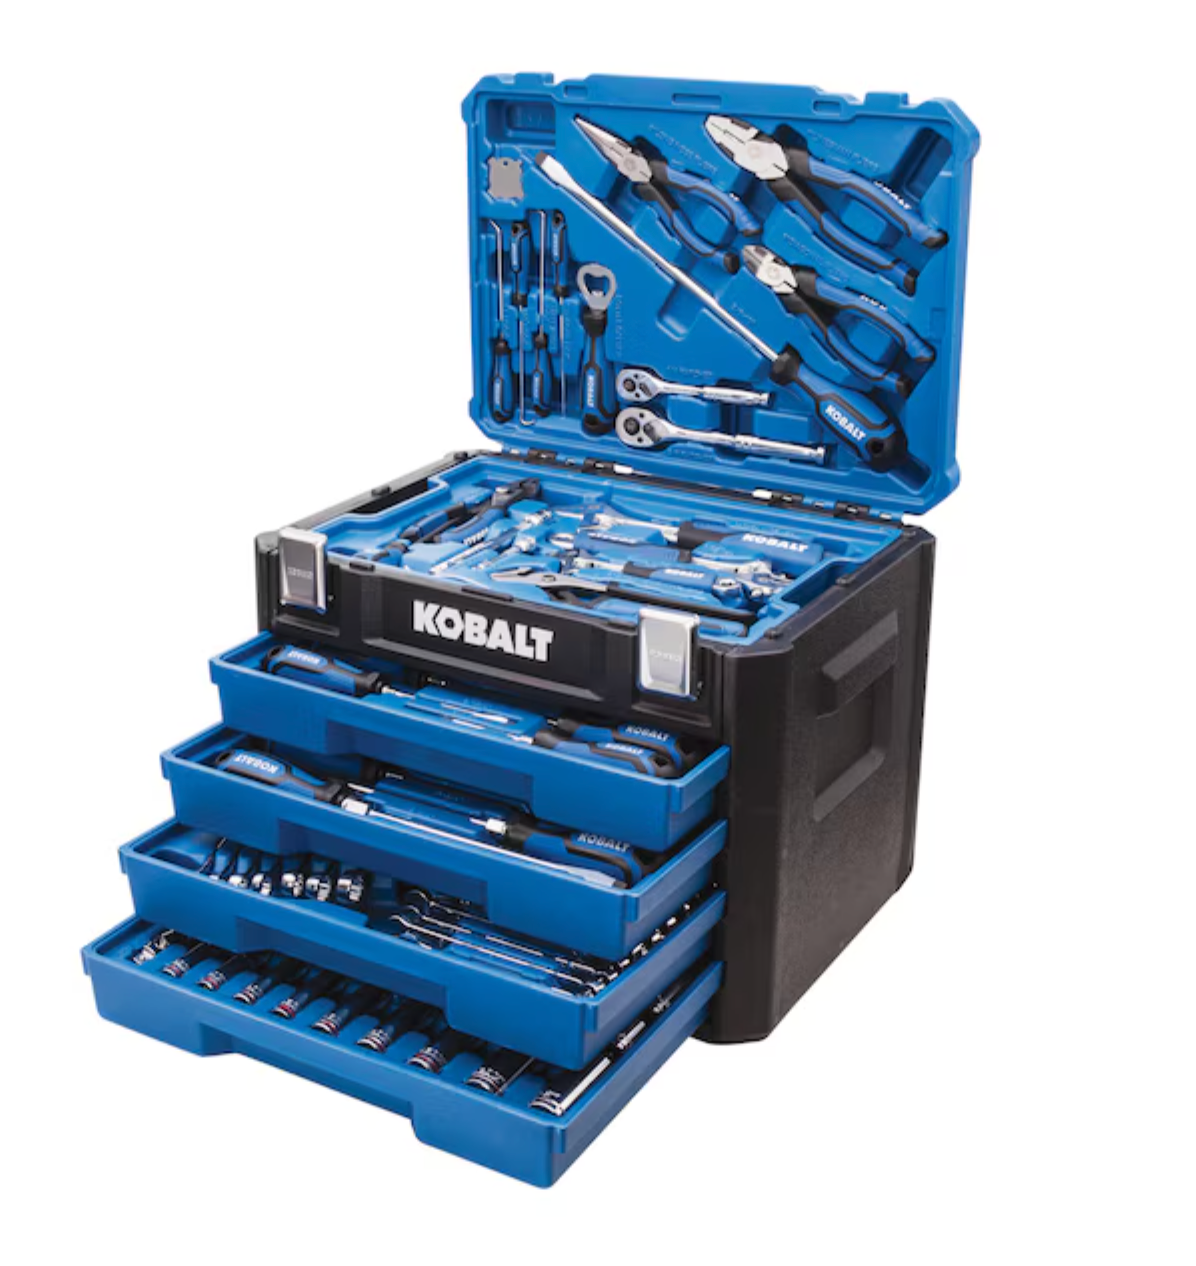 Kobalt 100-Piece Household Tool